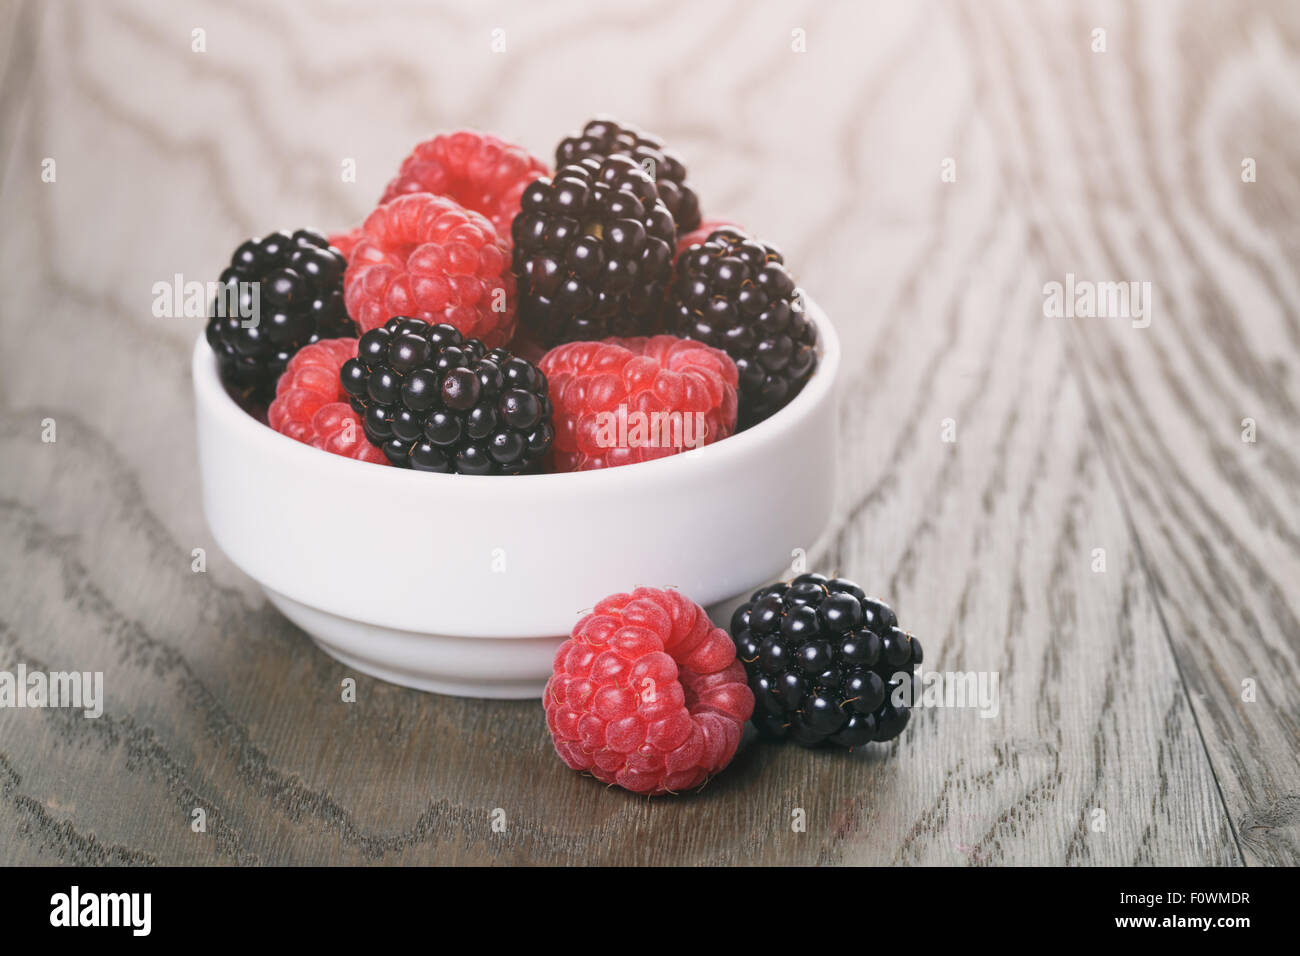 raspberries and blackberries in white bowl on wood table Stock Photo